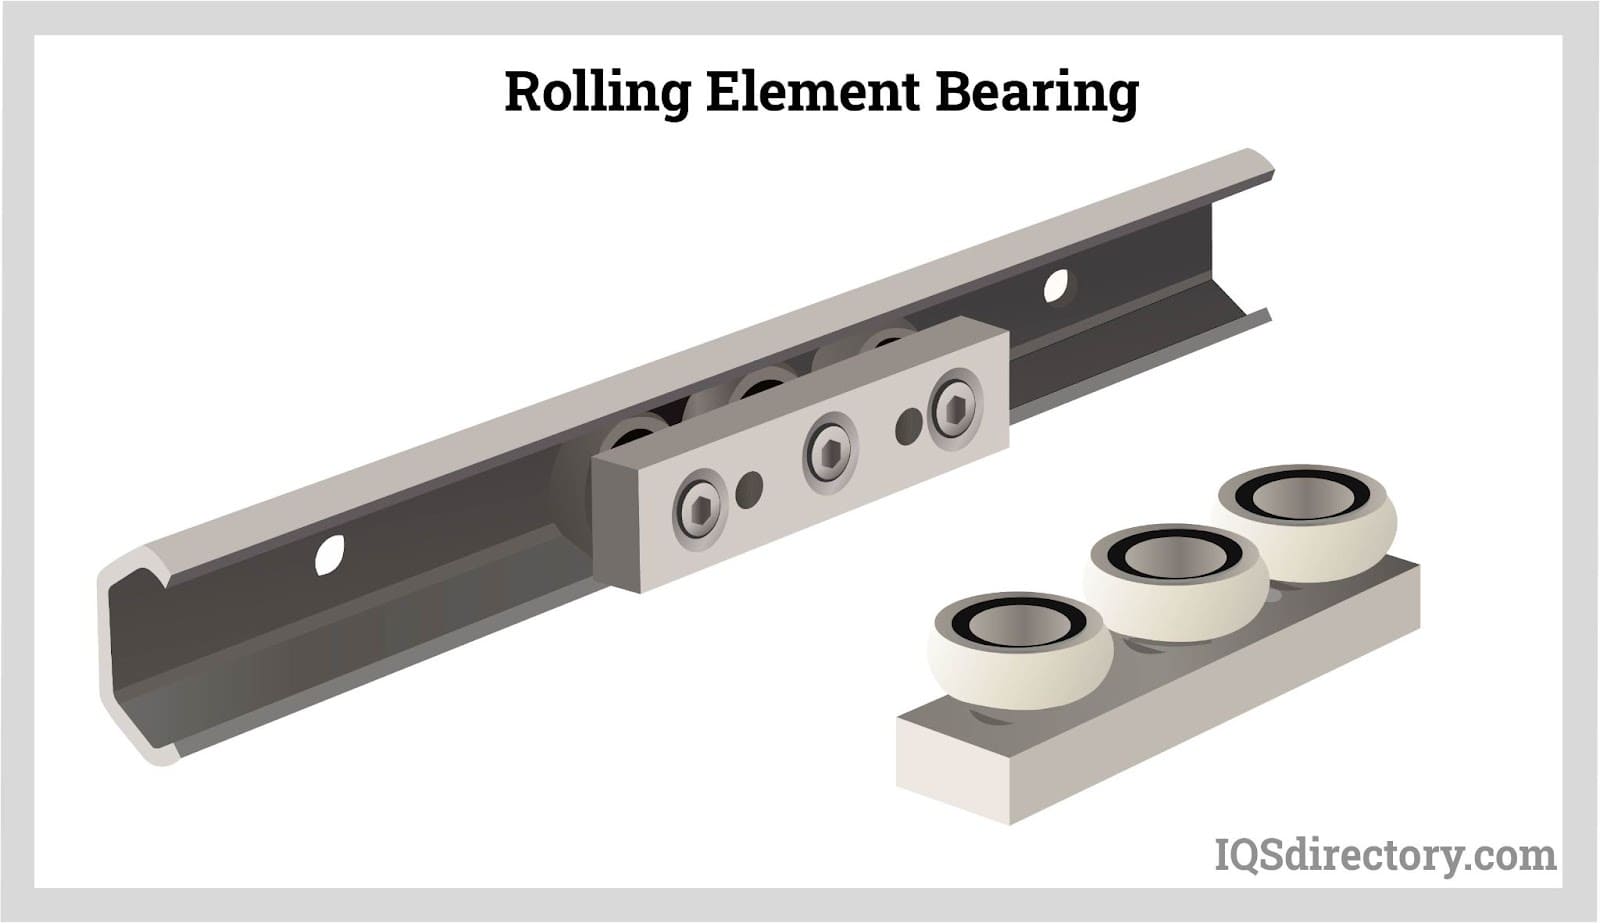 Rolling Element Bearing